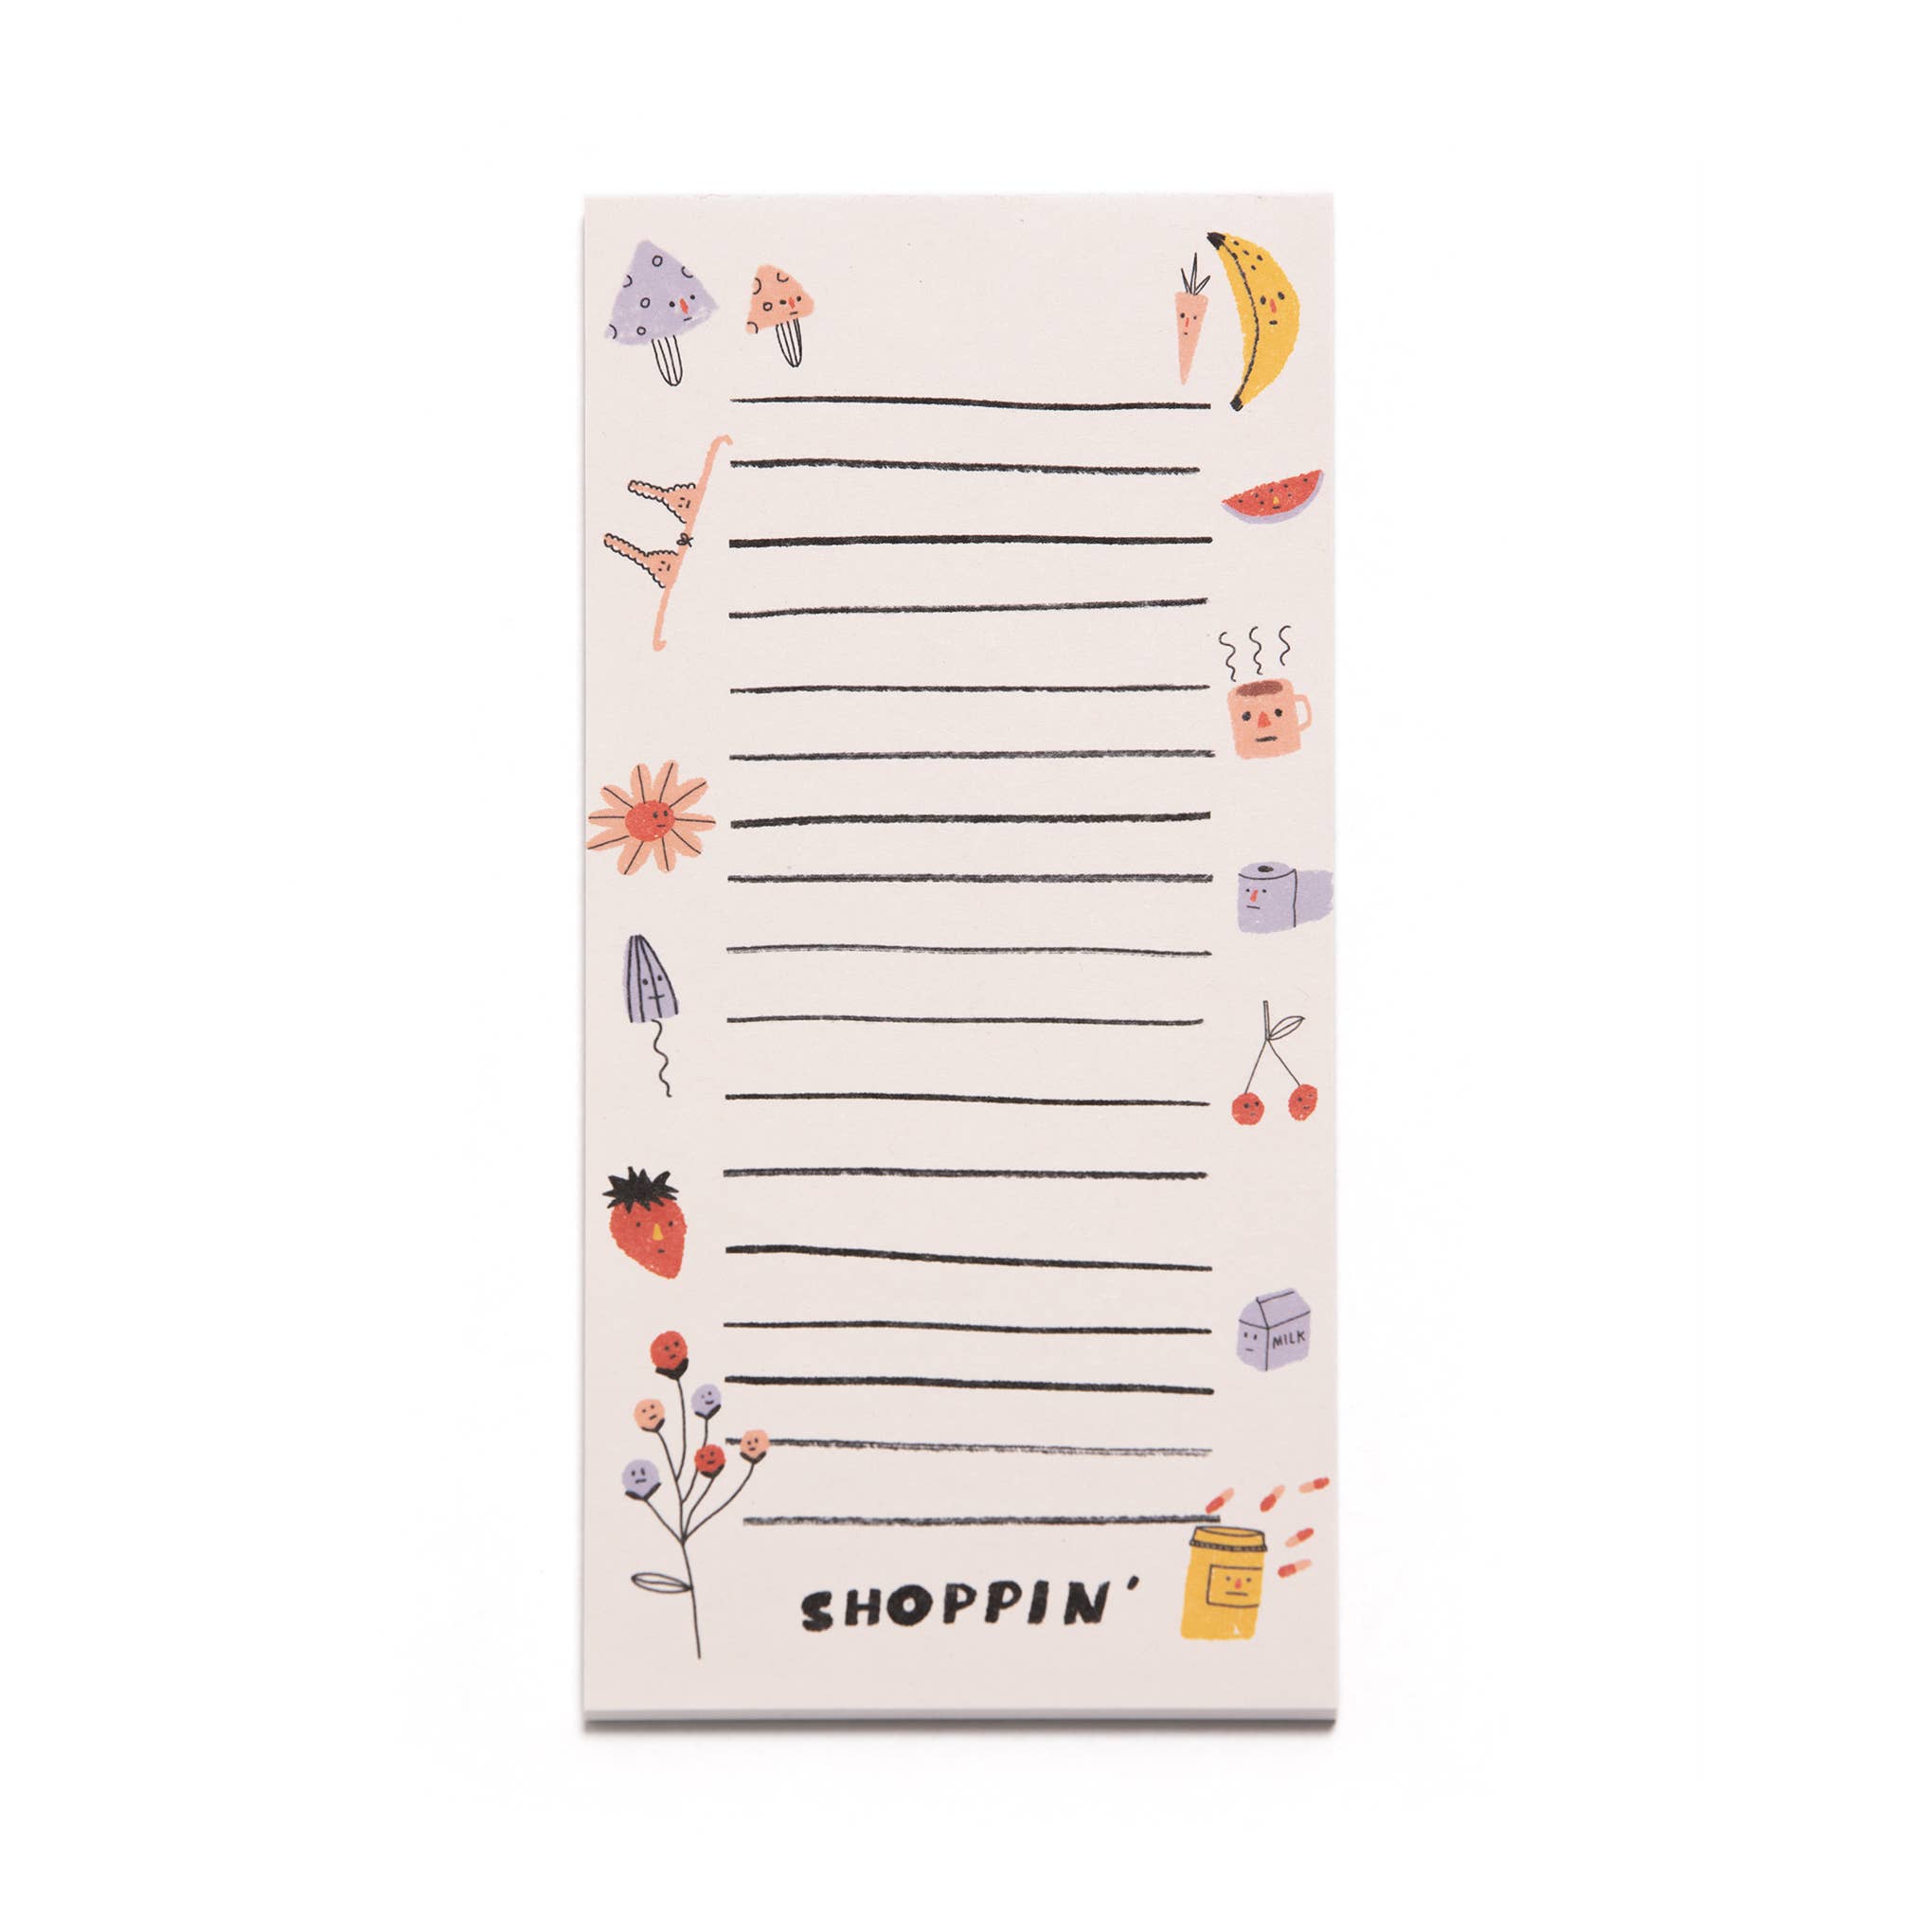 Shoppin' Market Note Pad